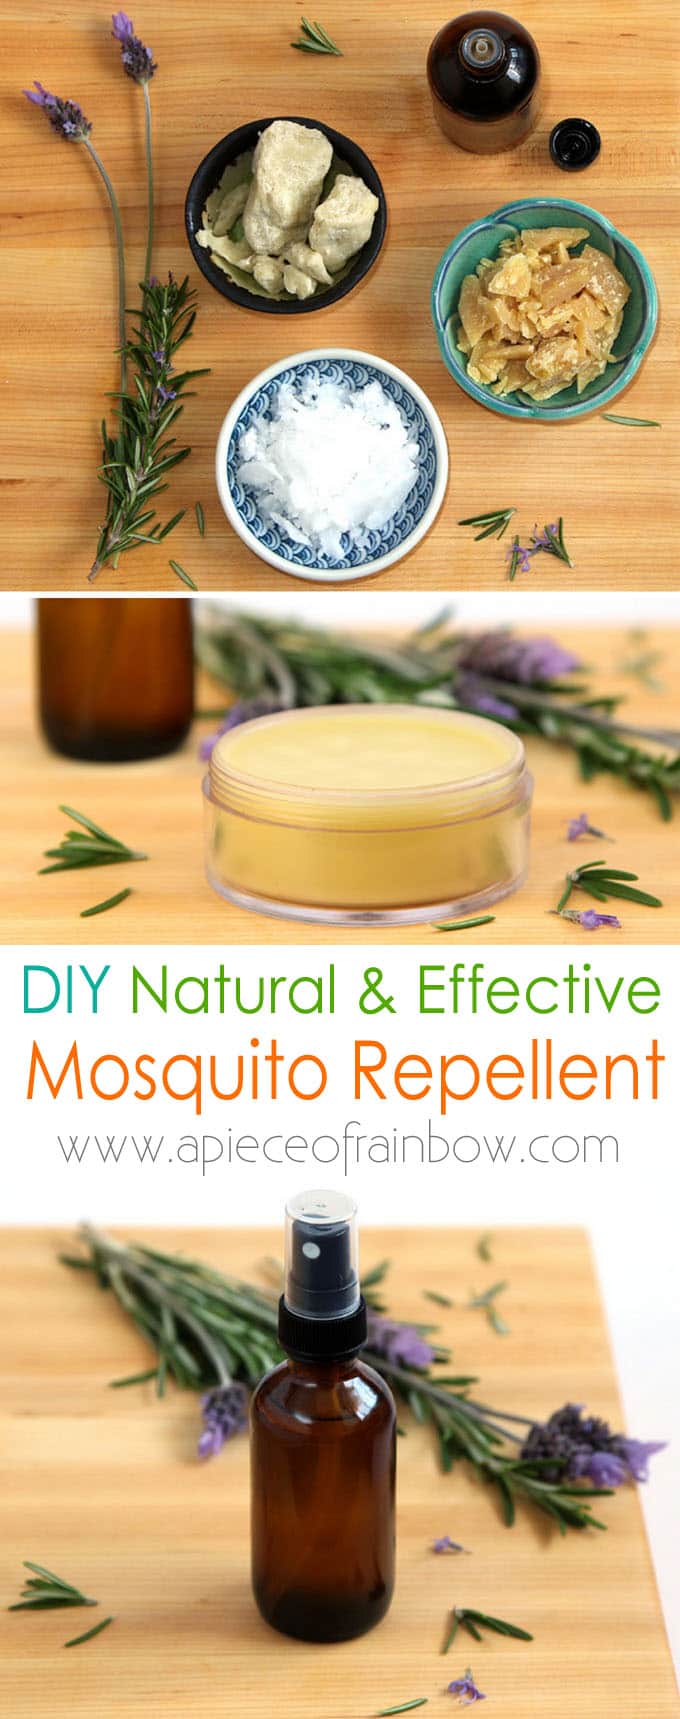 DIY-natural-mosquito-repellent-apieceofrainbow